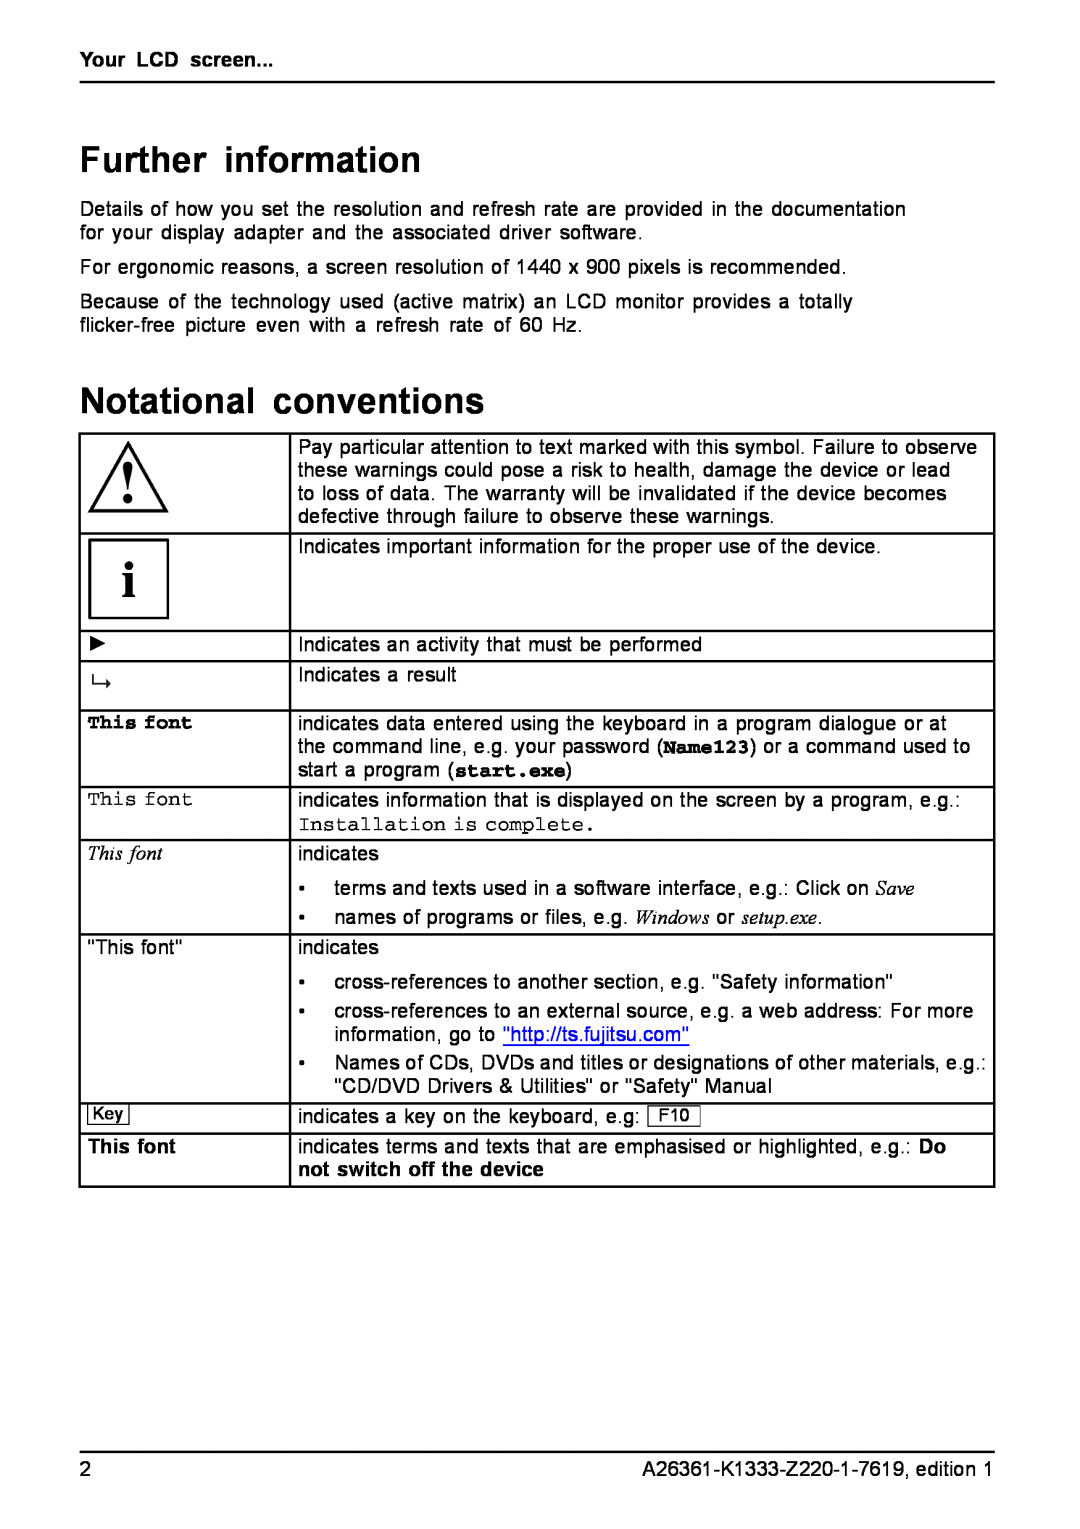 Fujitsu B19W-5 ECO manual Further information, Notational conventions, This font, information, go to http//ts.fujitsu.com 